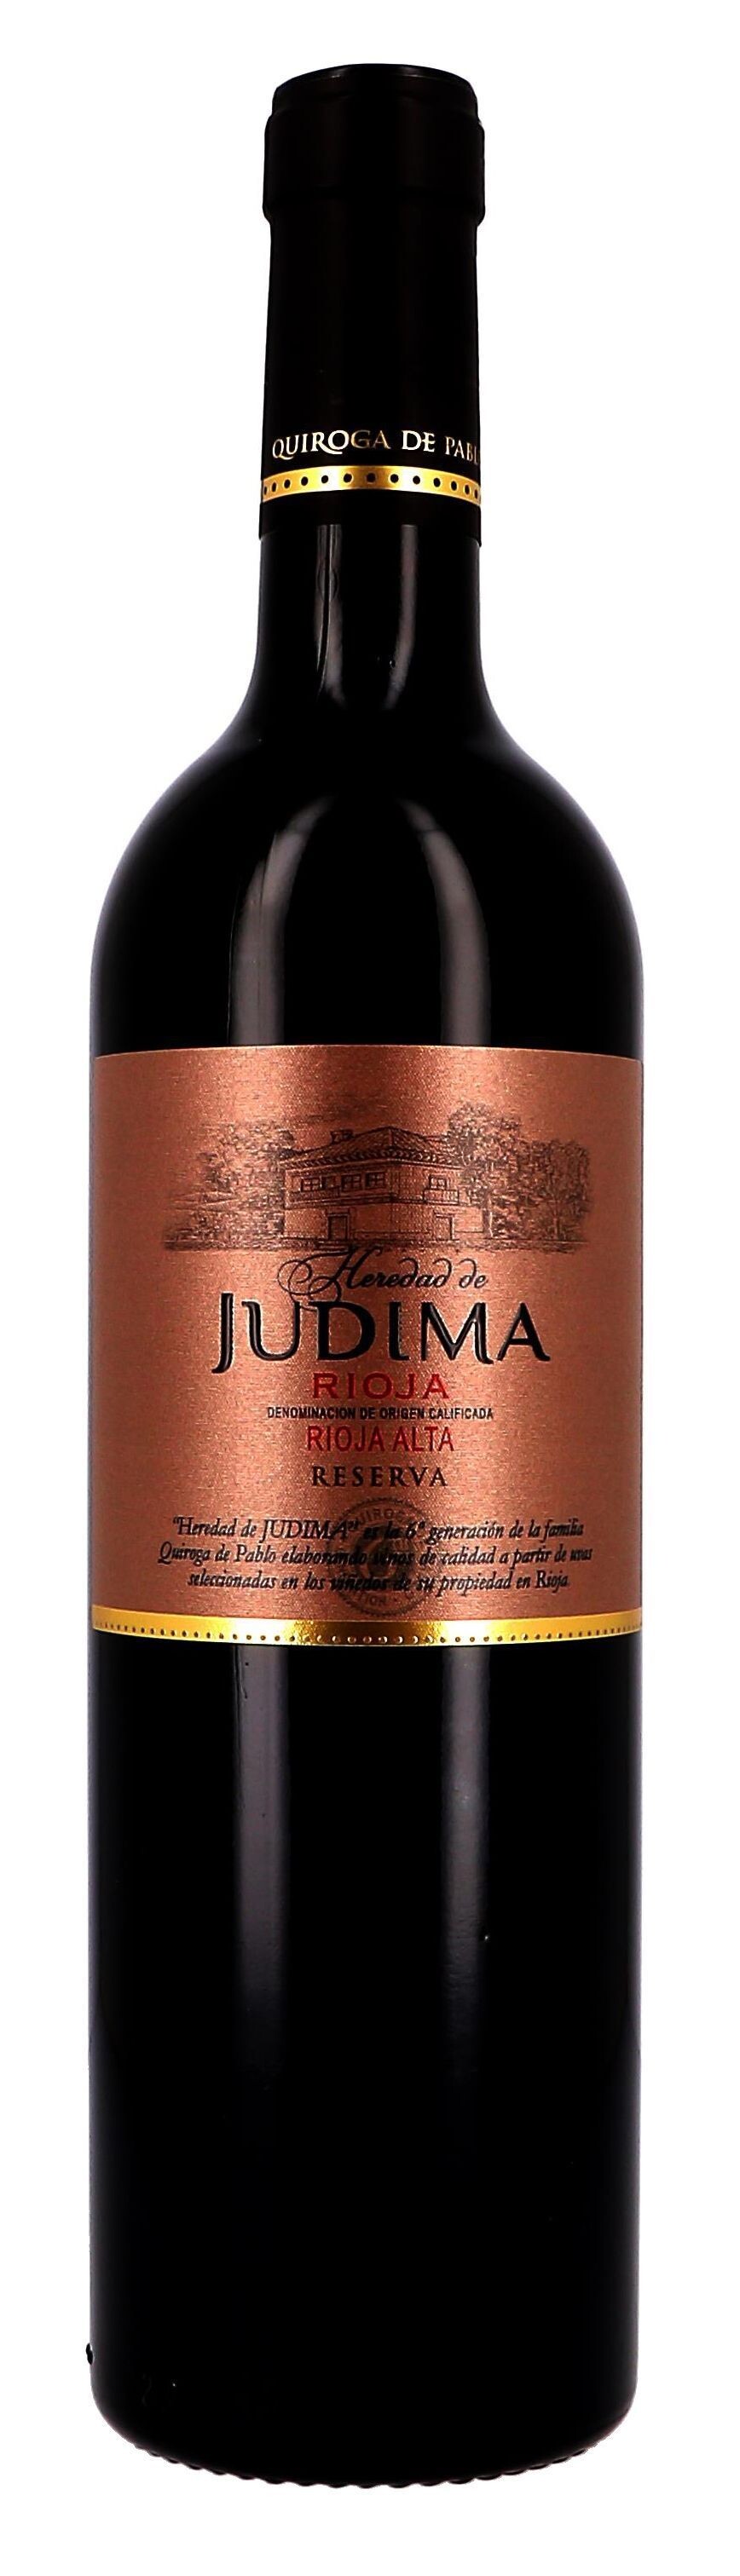 Heredad de Judima Reserva tinto 75cl 2011 Rioja Bodegas Quiroga de Pablo (Wijnen)